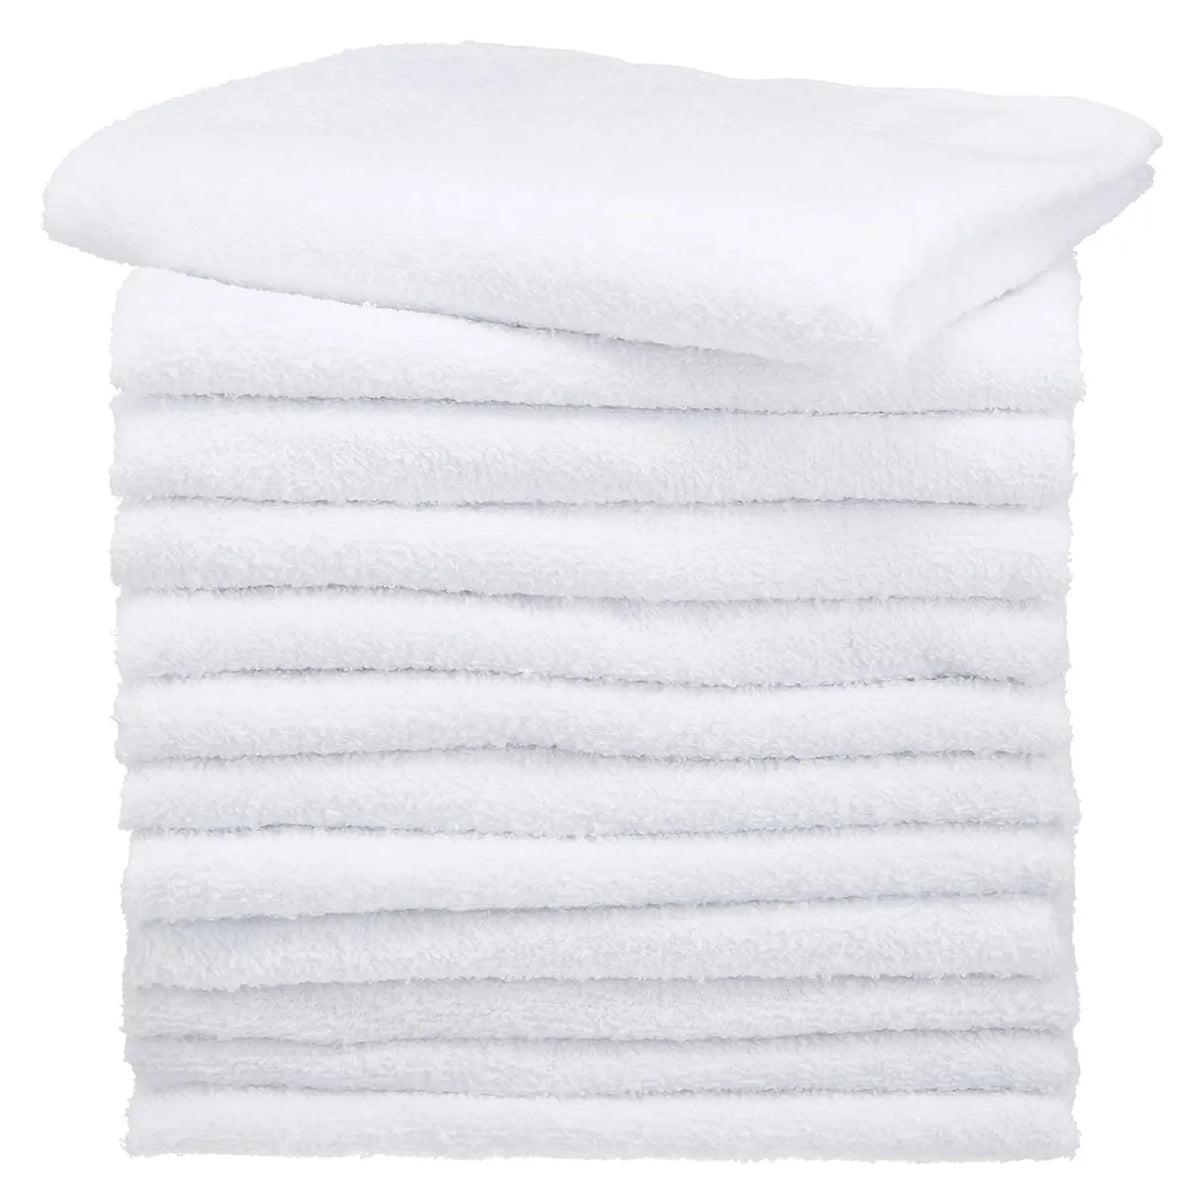 SATO TRADING Cotton Loop Pile Towel 340x860mm 12 pcs